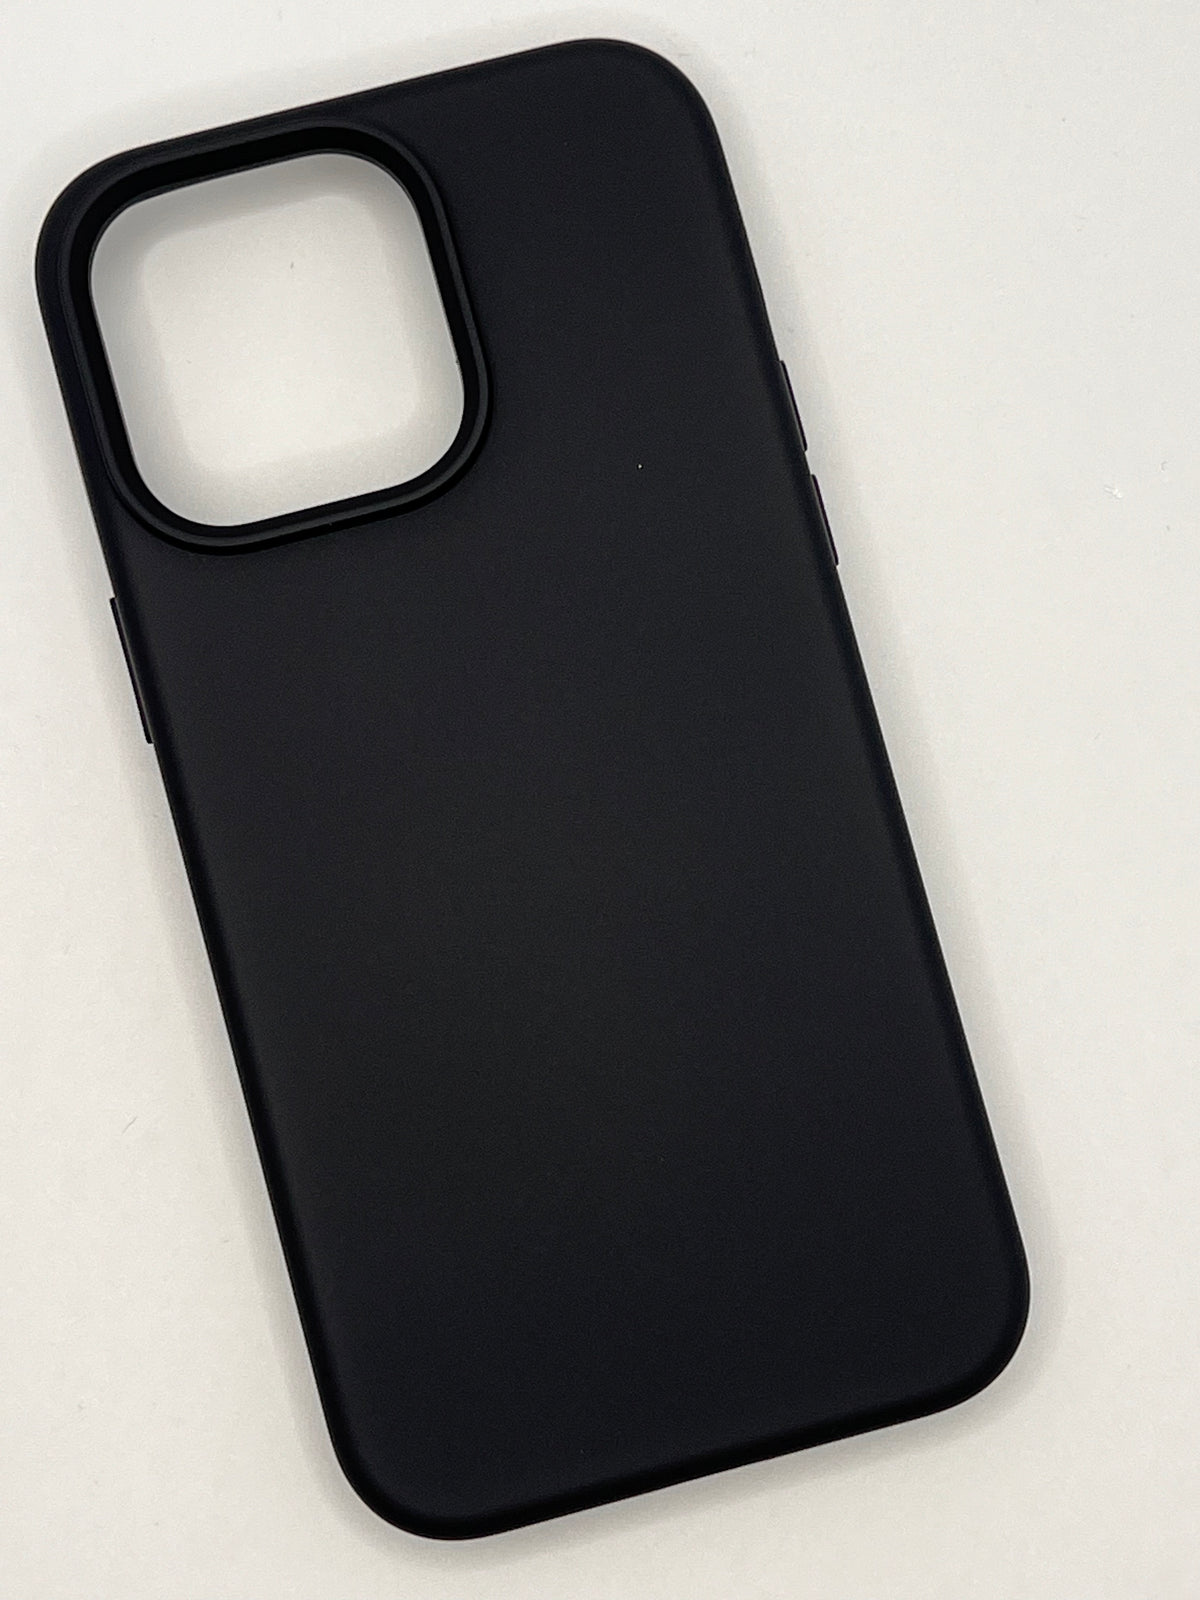 iPhone 12/12 Pro Apple Hard Back Case